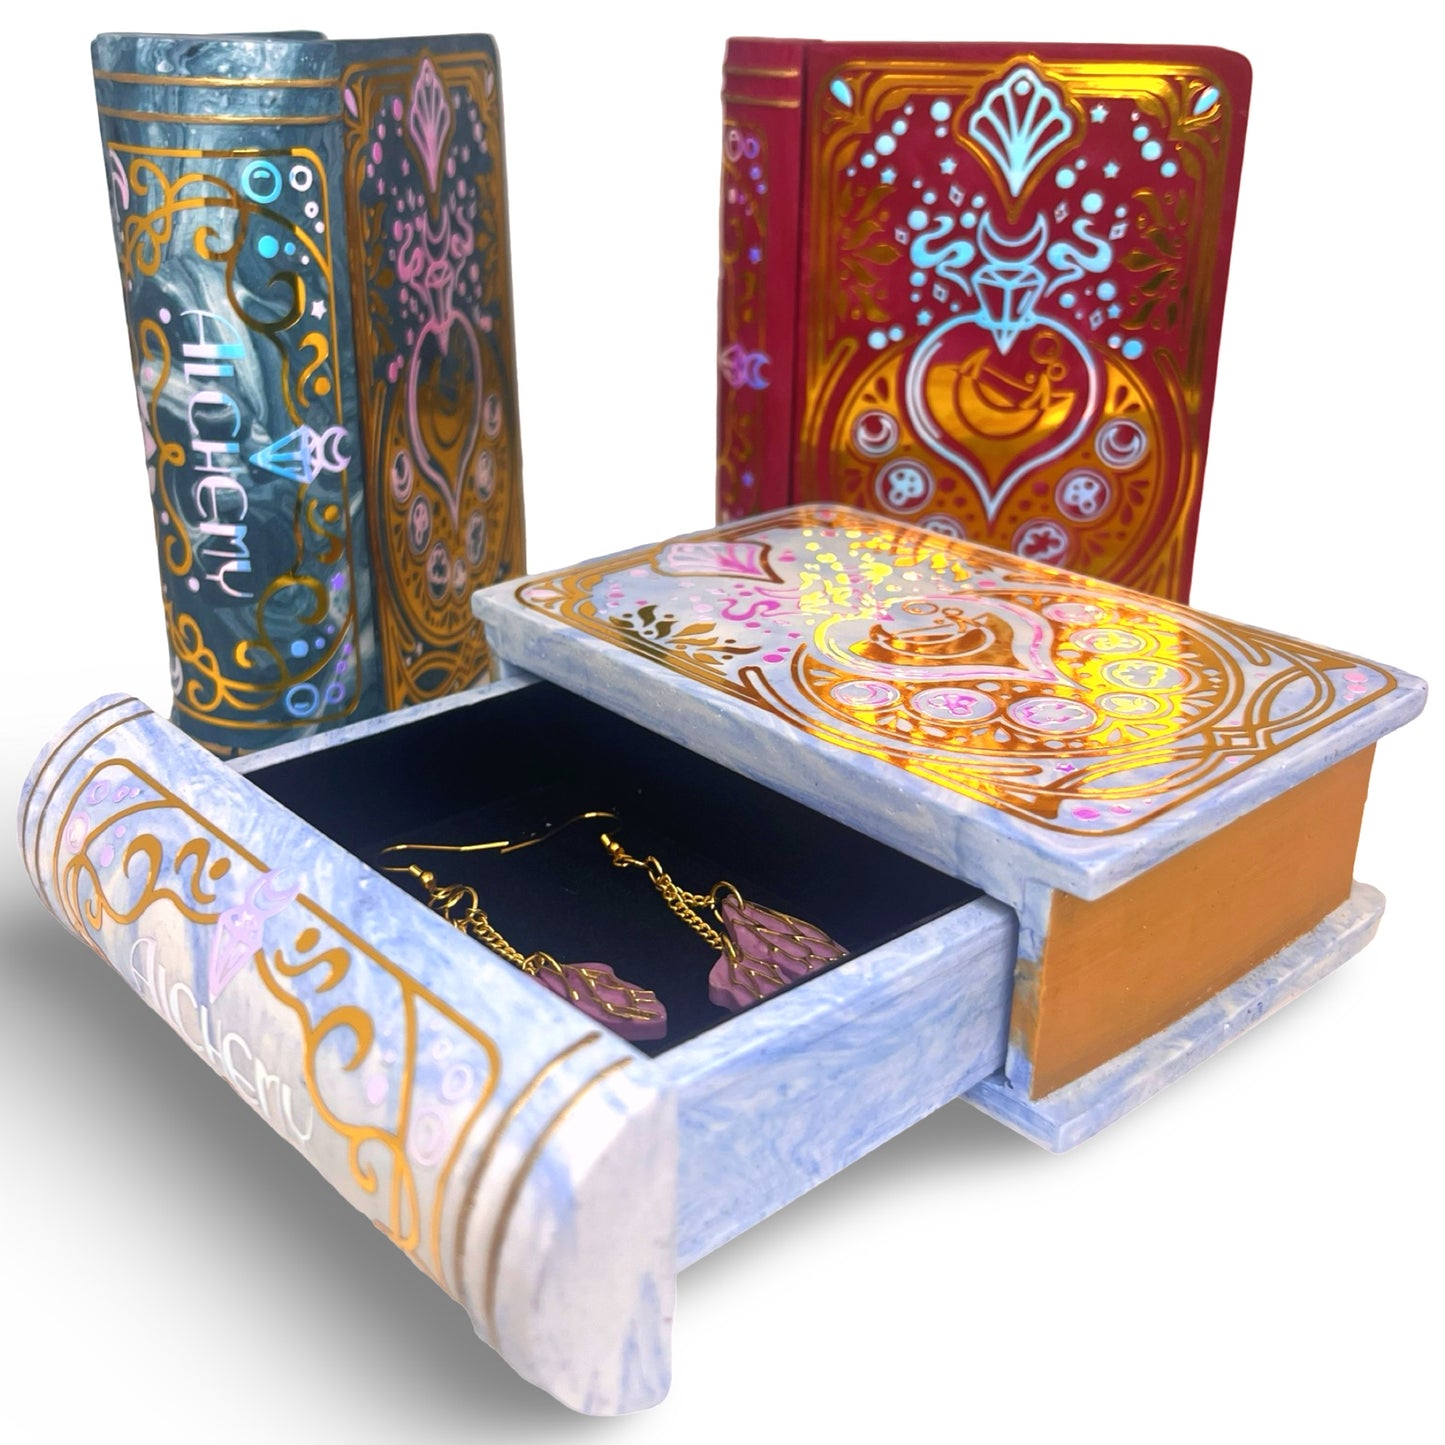 Alchemy Themed Trinket Book Shaped Jewellery Box